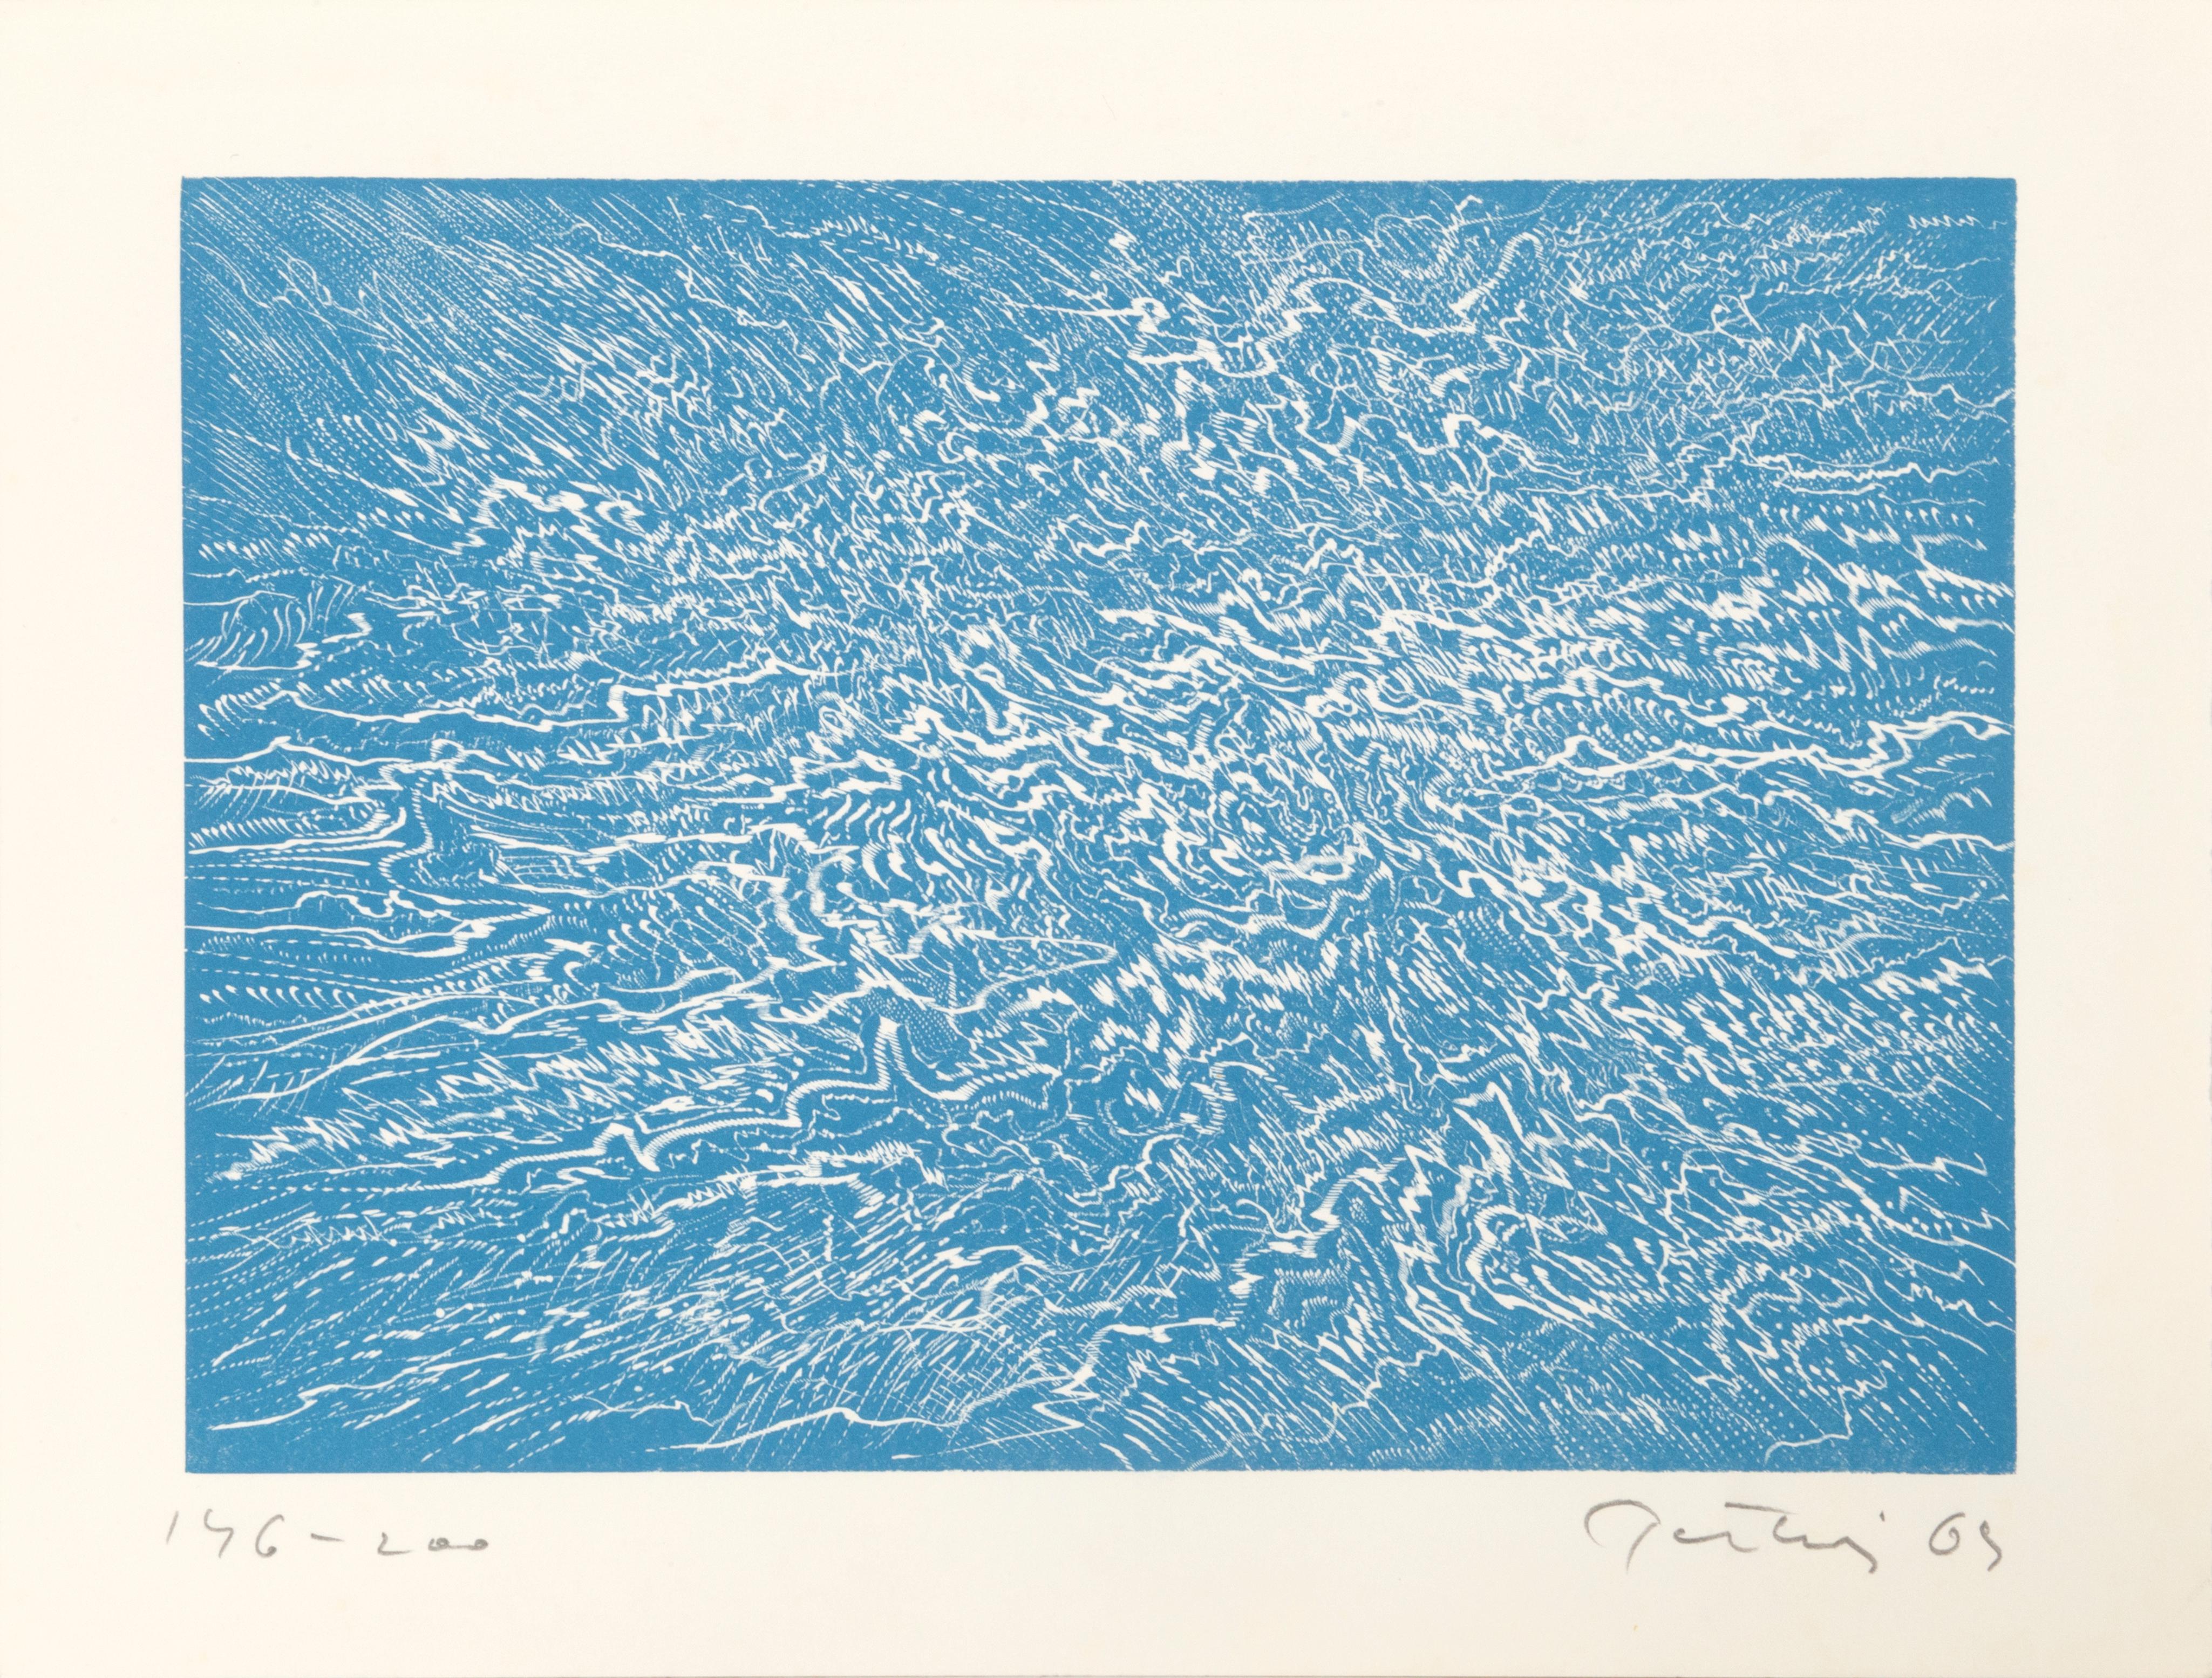 Gabor F. Peterdi Landscape Print - Blue Surf, Abstract Etching by Gabor Peterdi